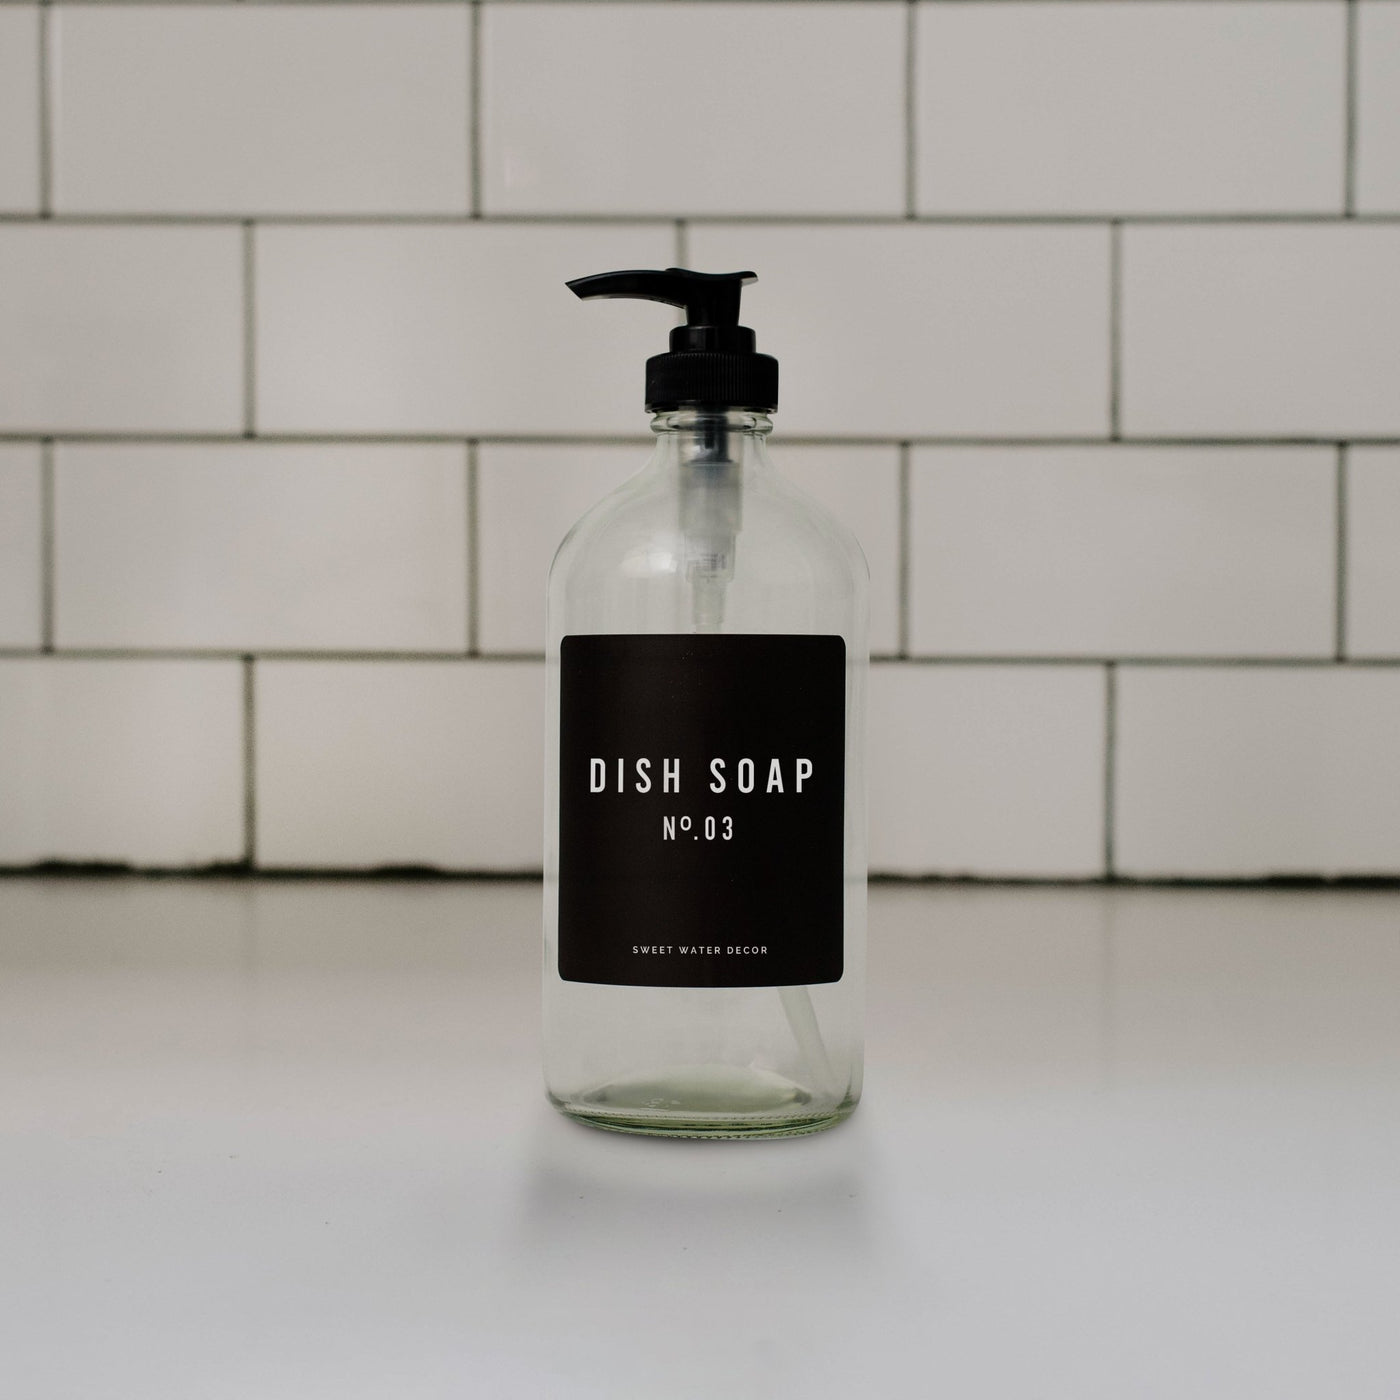 16oz Clear Glass Dish Soap Dispenser - Black Label - Sweet Water Decor - Dispensers